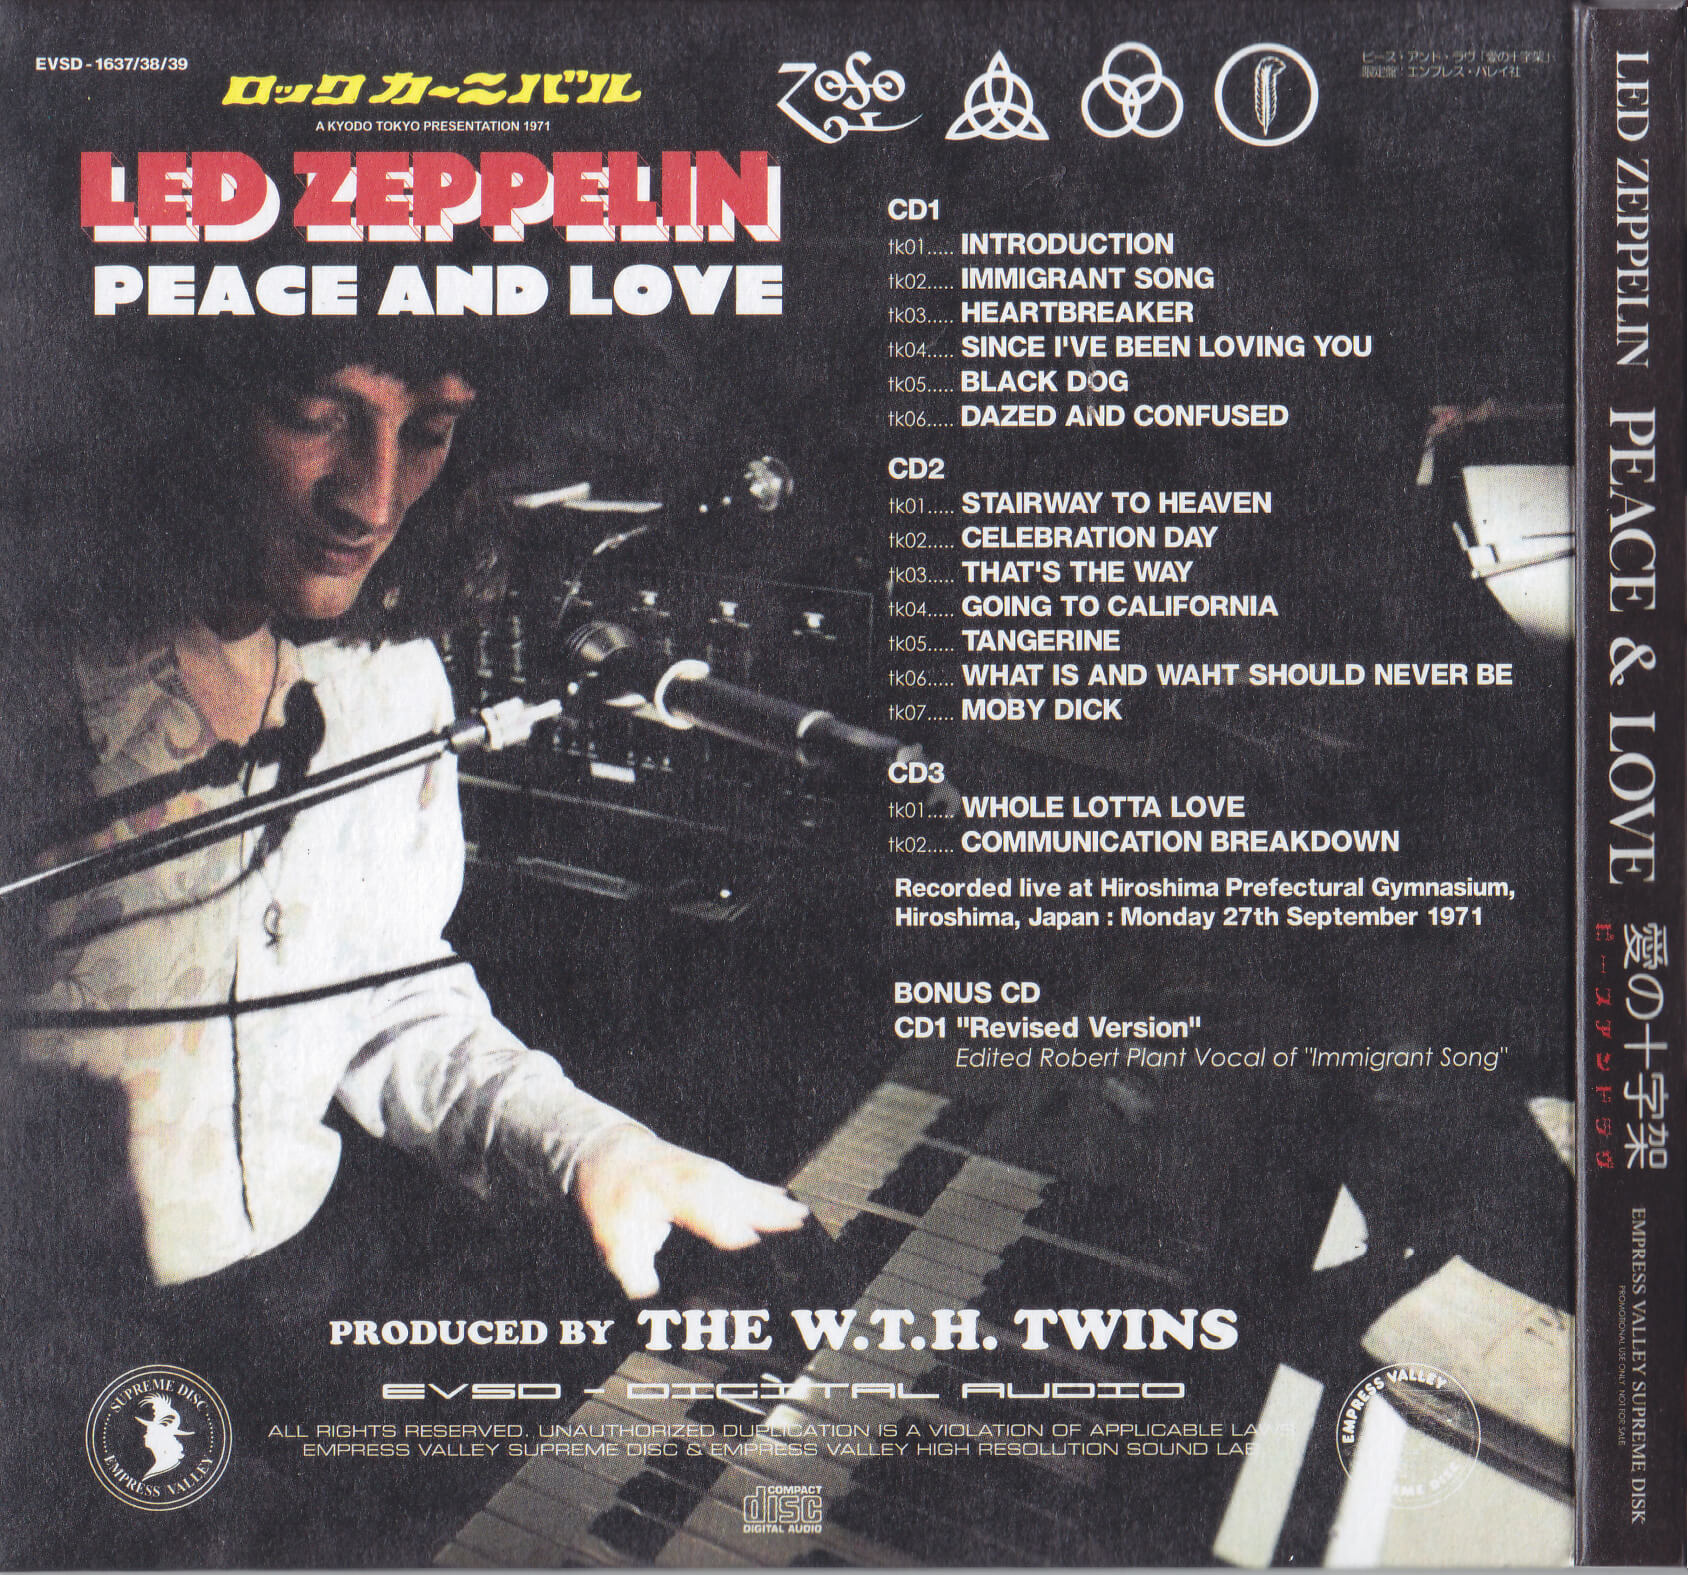 Led Zeppelin IV CD Replica Presentation Disc 